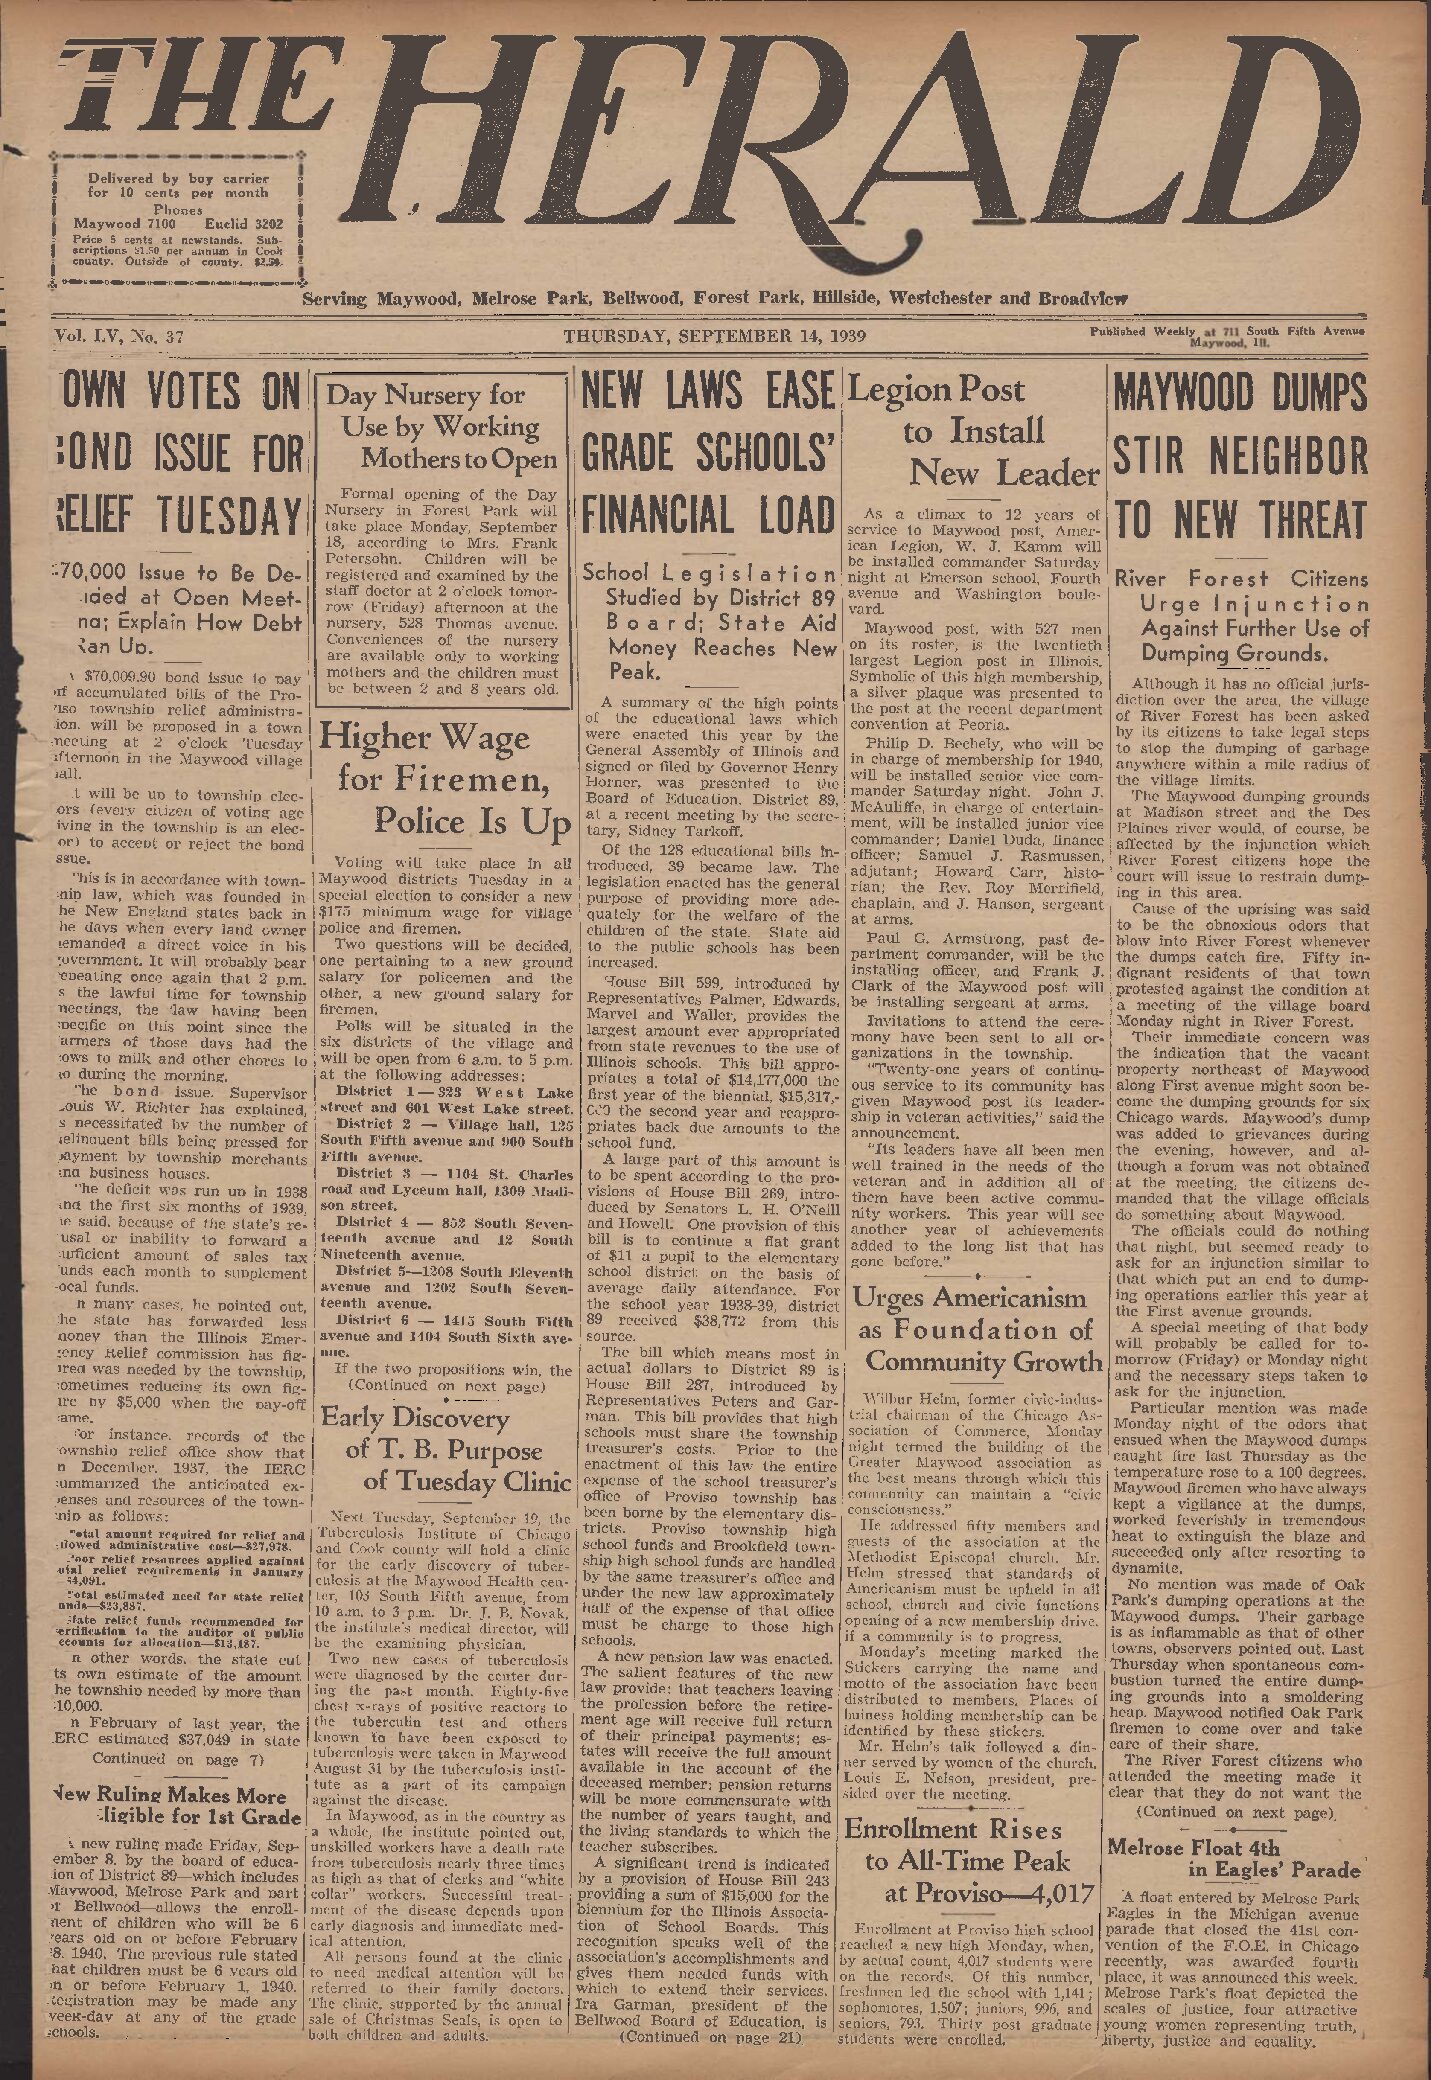 The Herald – 19390914